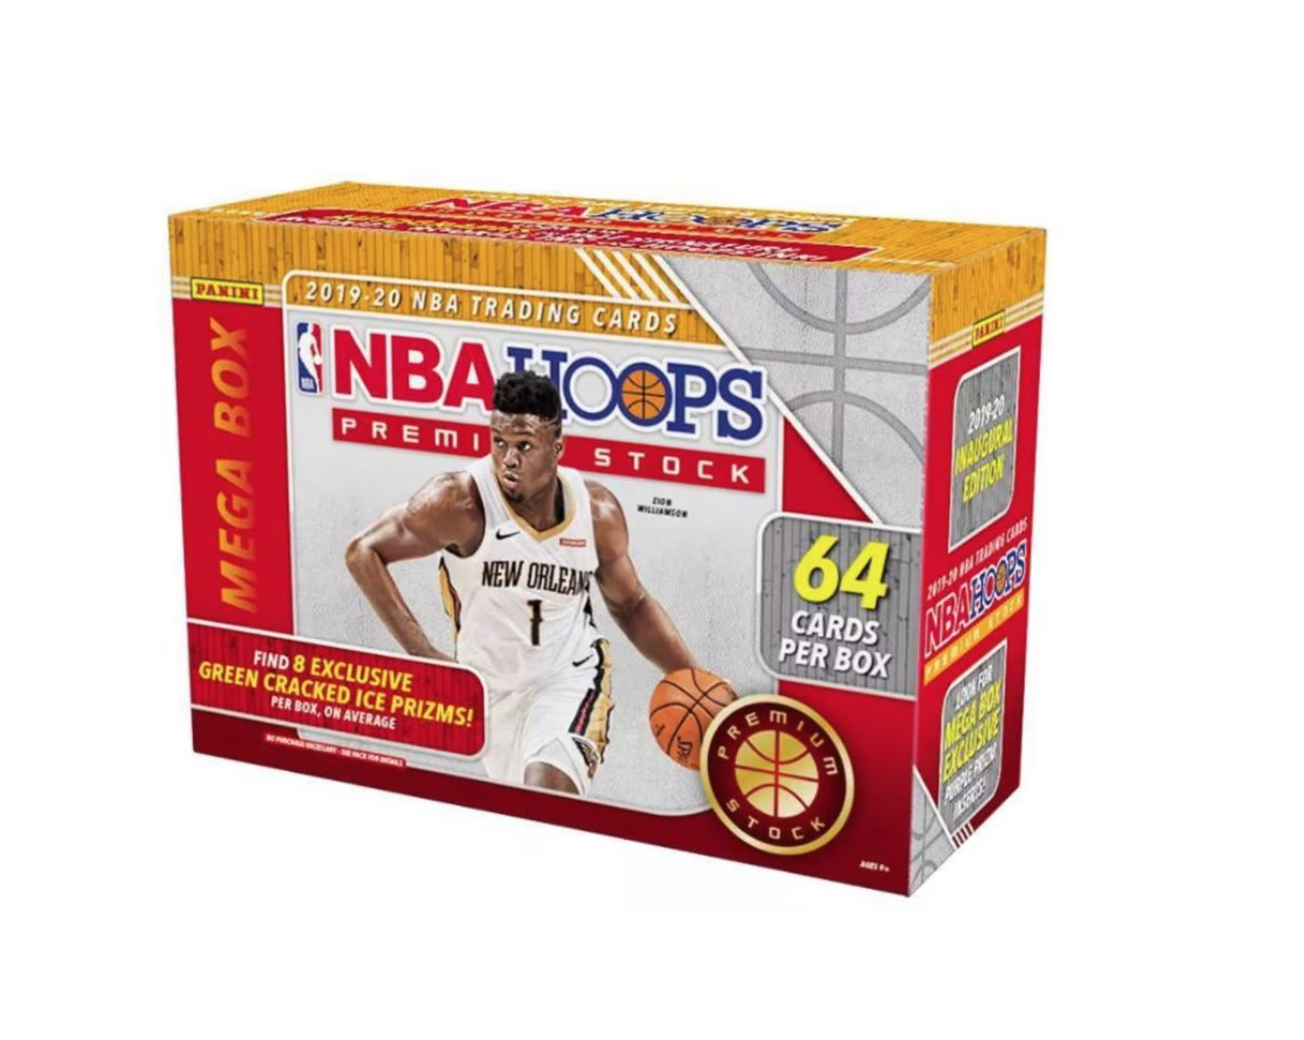 2019/20 Panini NBA Hoops Premium Stock Basketball Mega Box 64ct Green